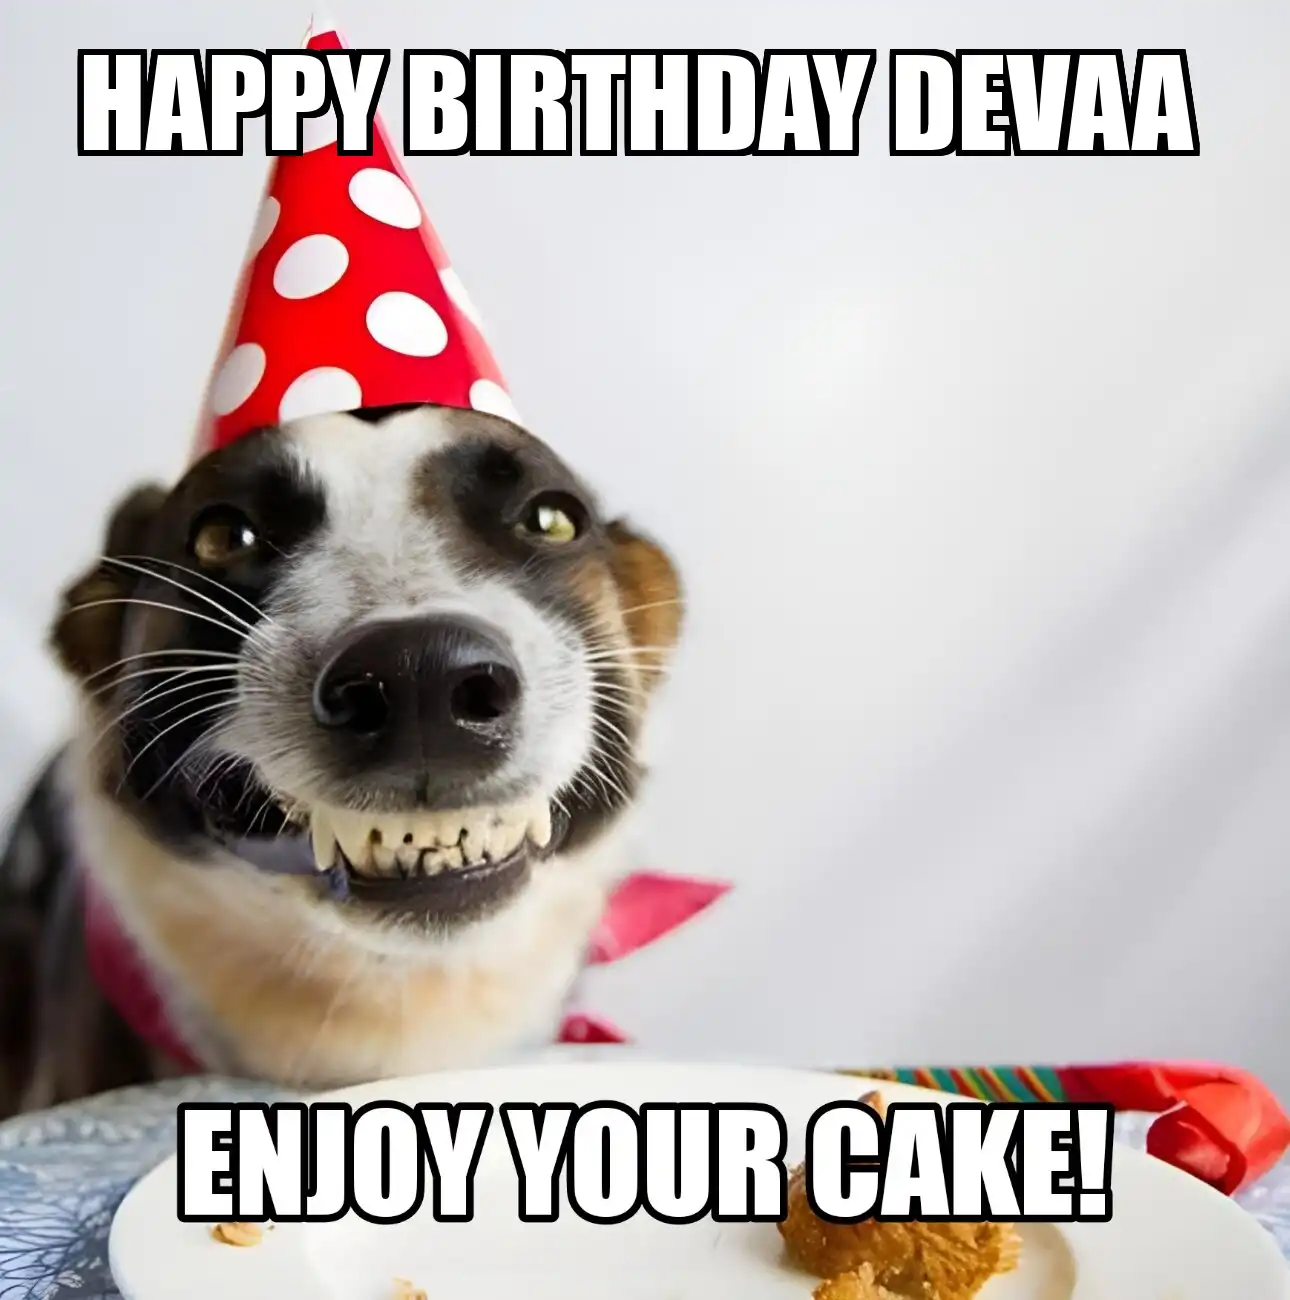 Happy Birthday Devaa Enjoy Your Cake Dog Meme